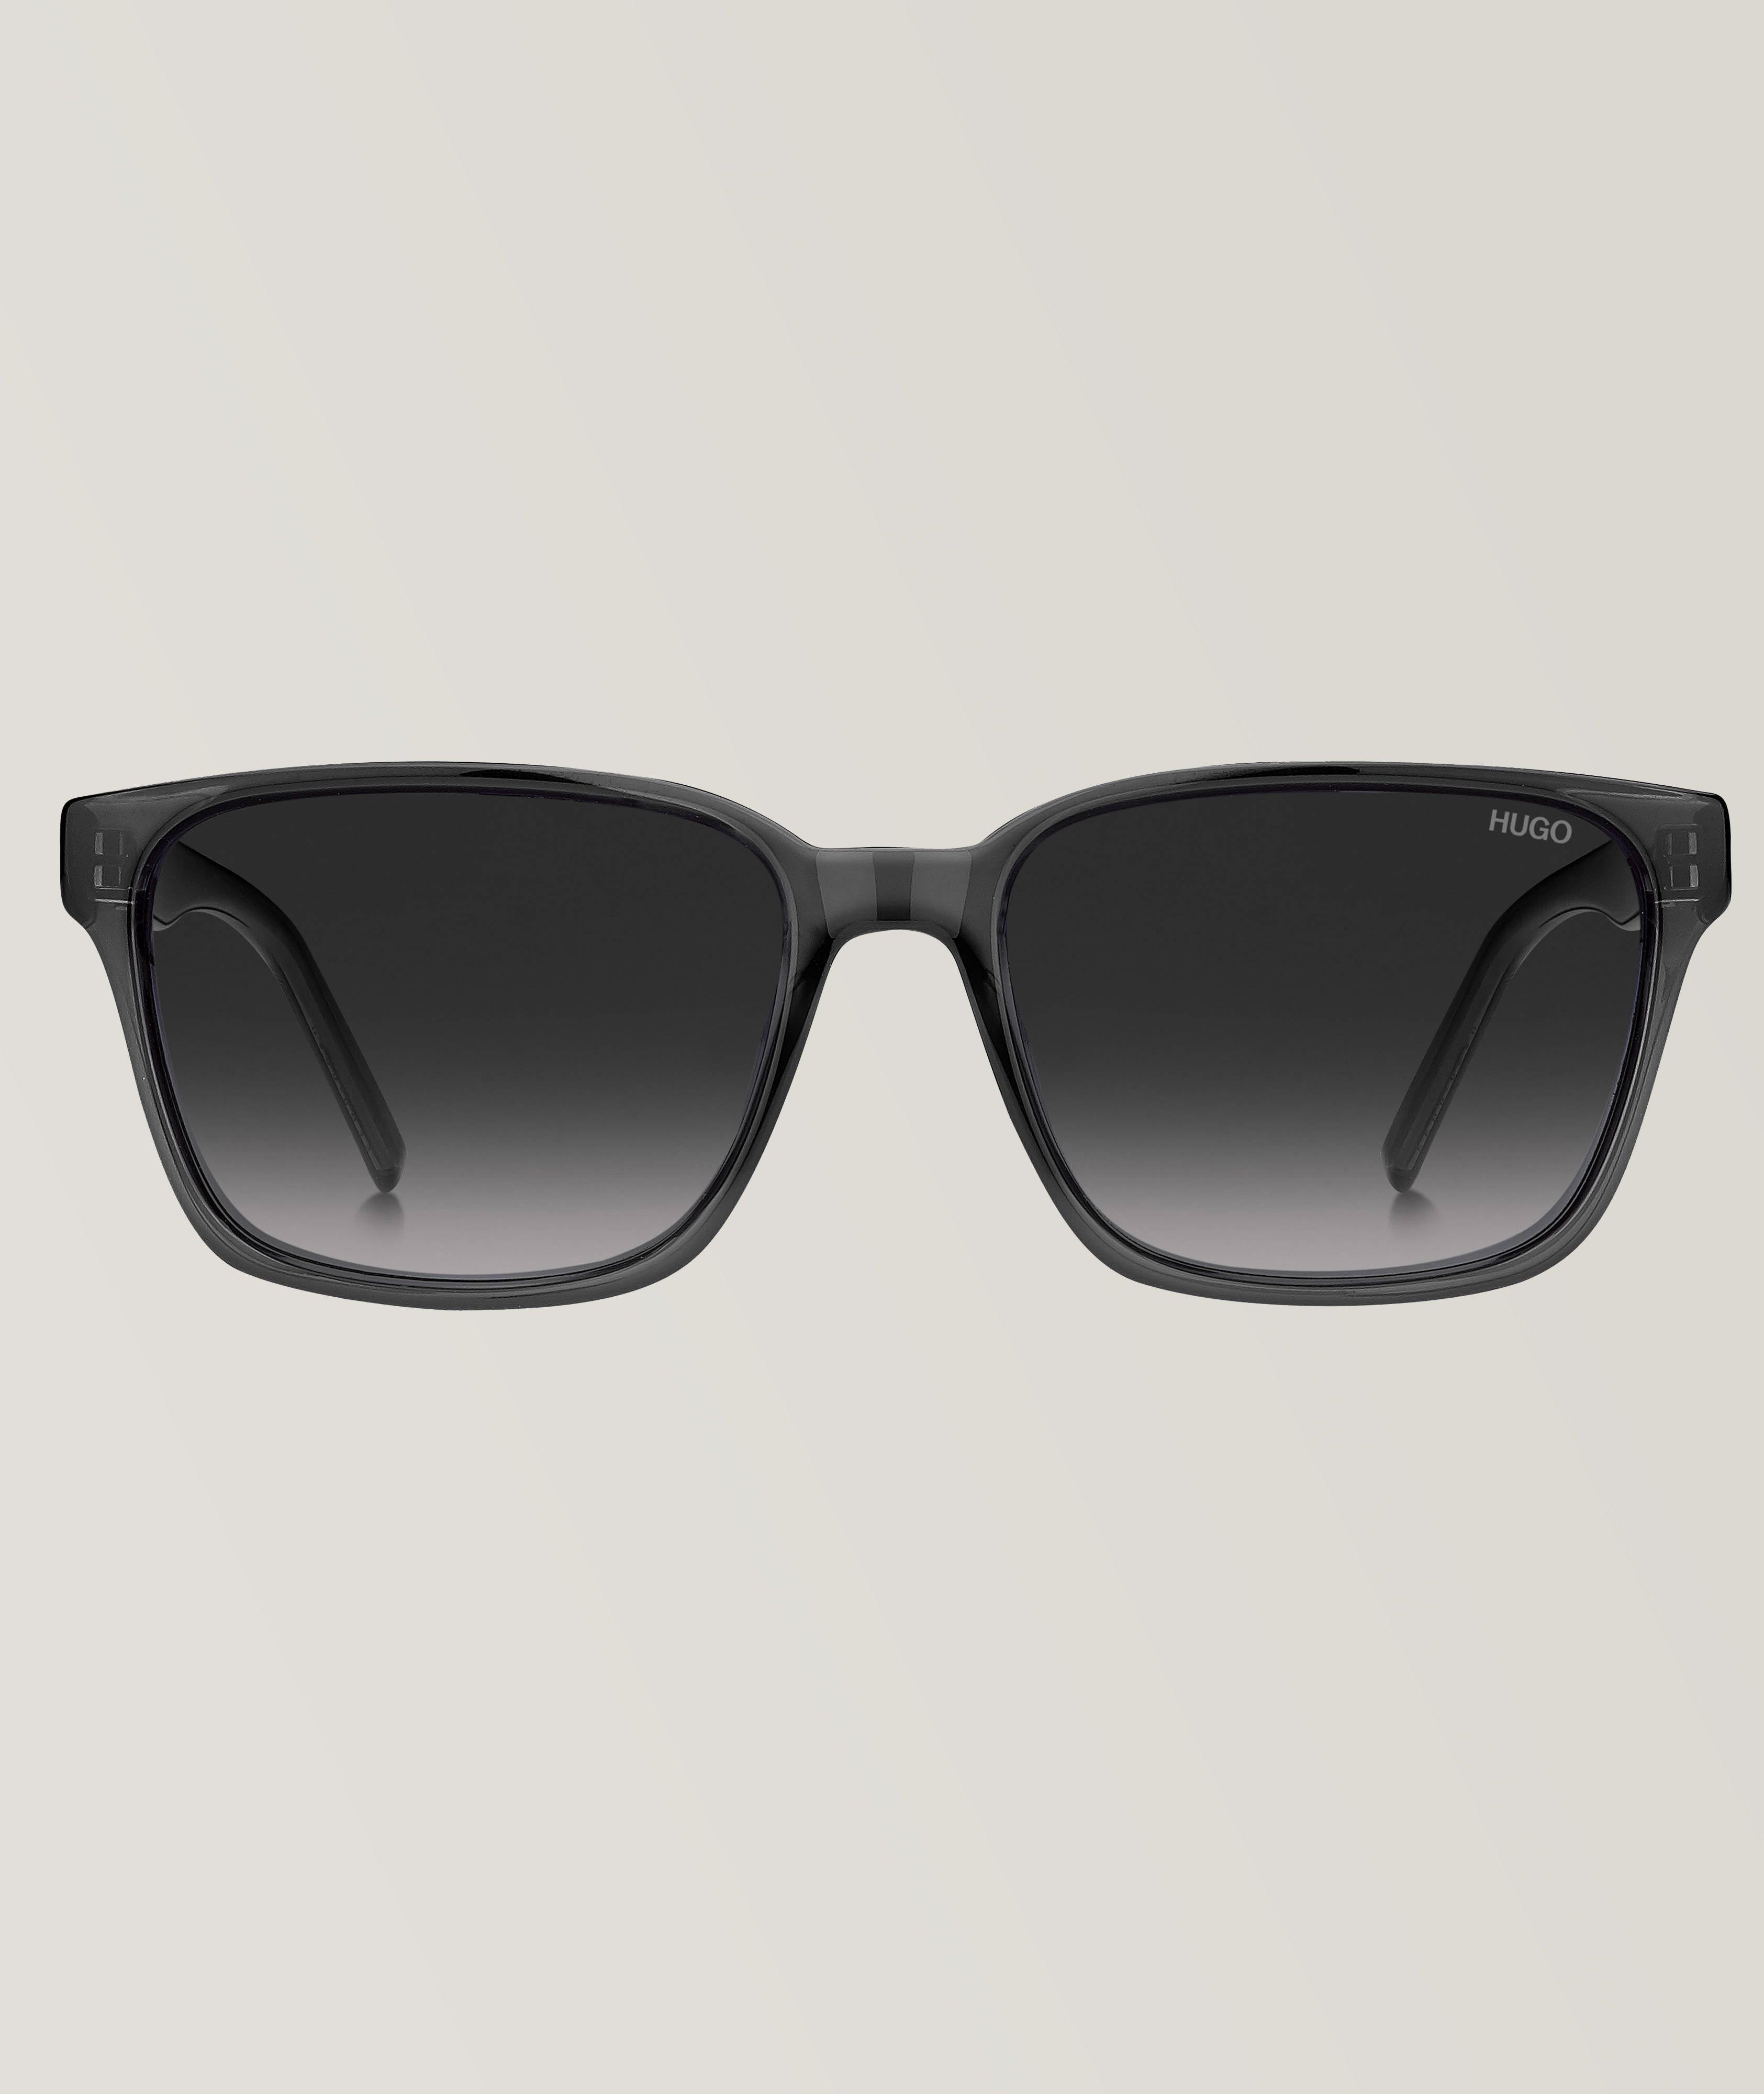 Hugo Grey Sunglasses With Grey Shaded Lenses image 0